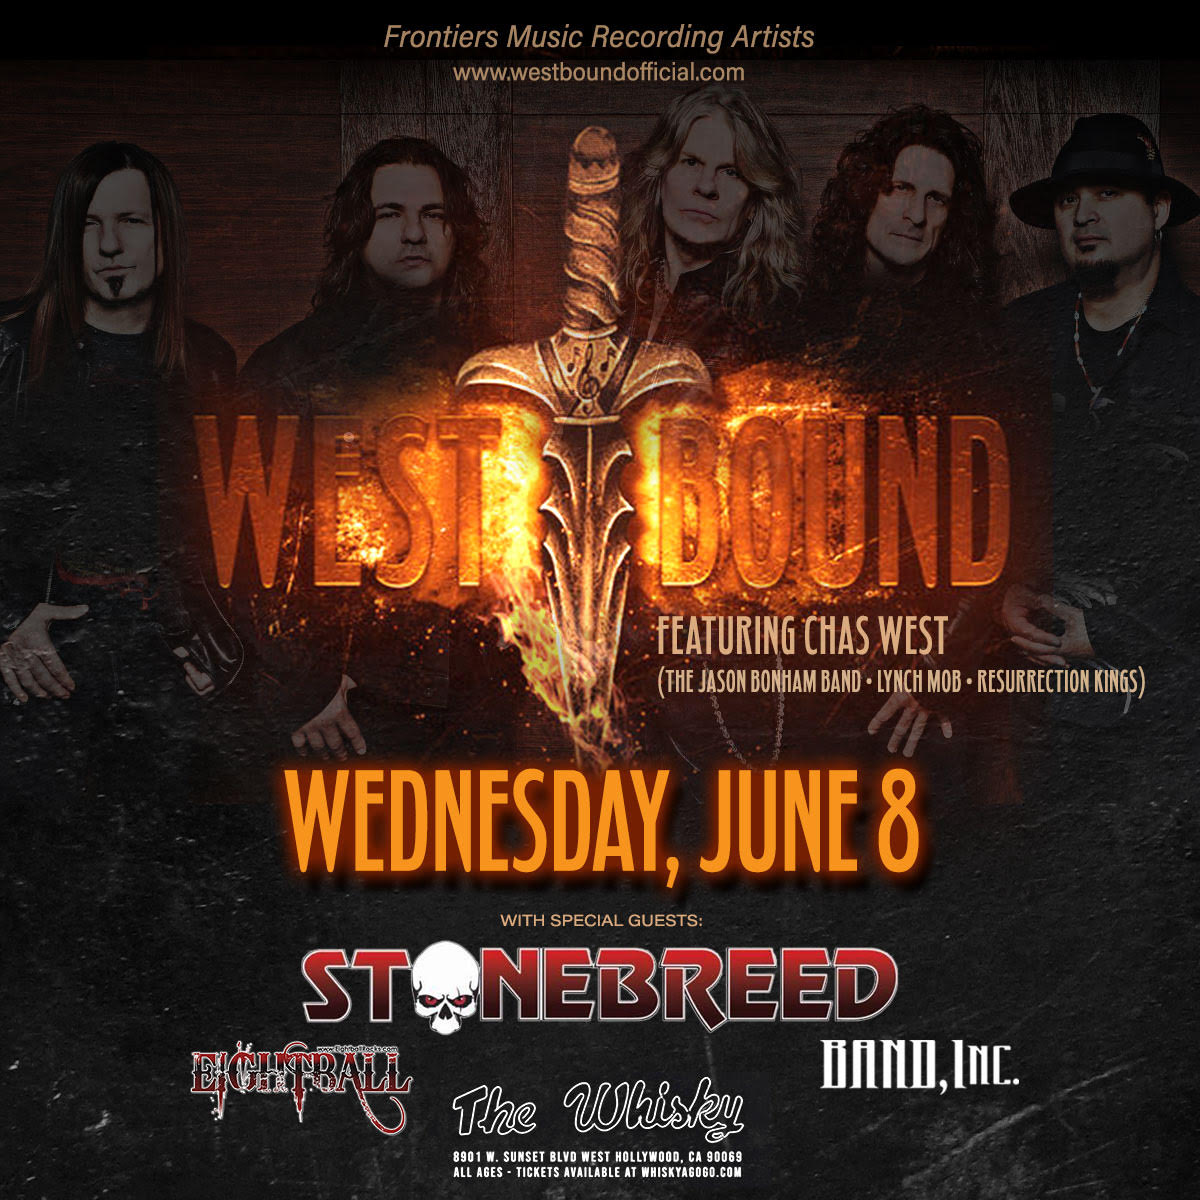 West Bound, Stonebreed, Band Inc., Eightball